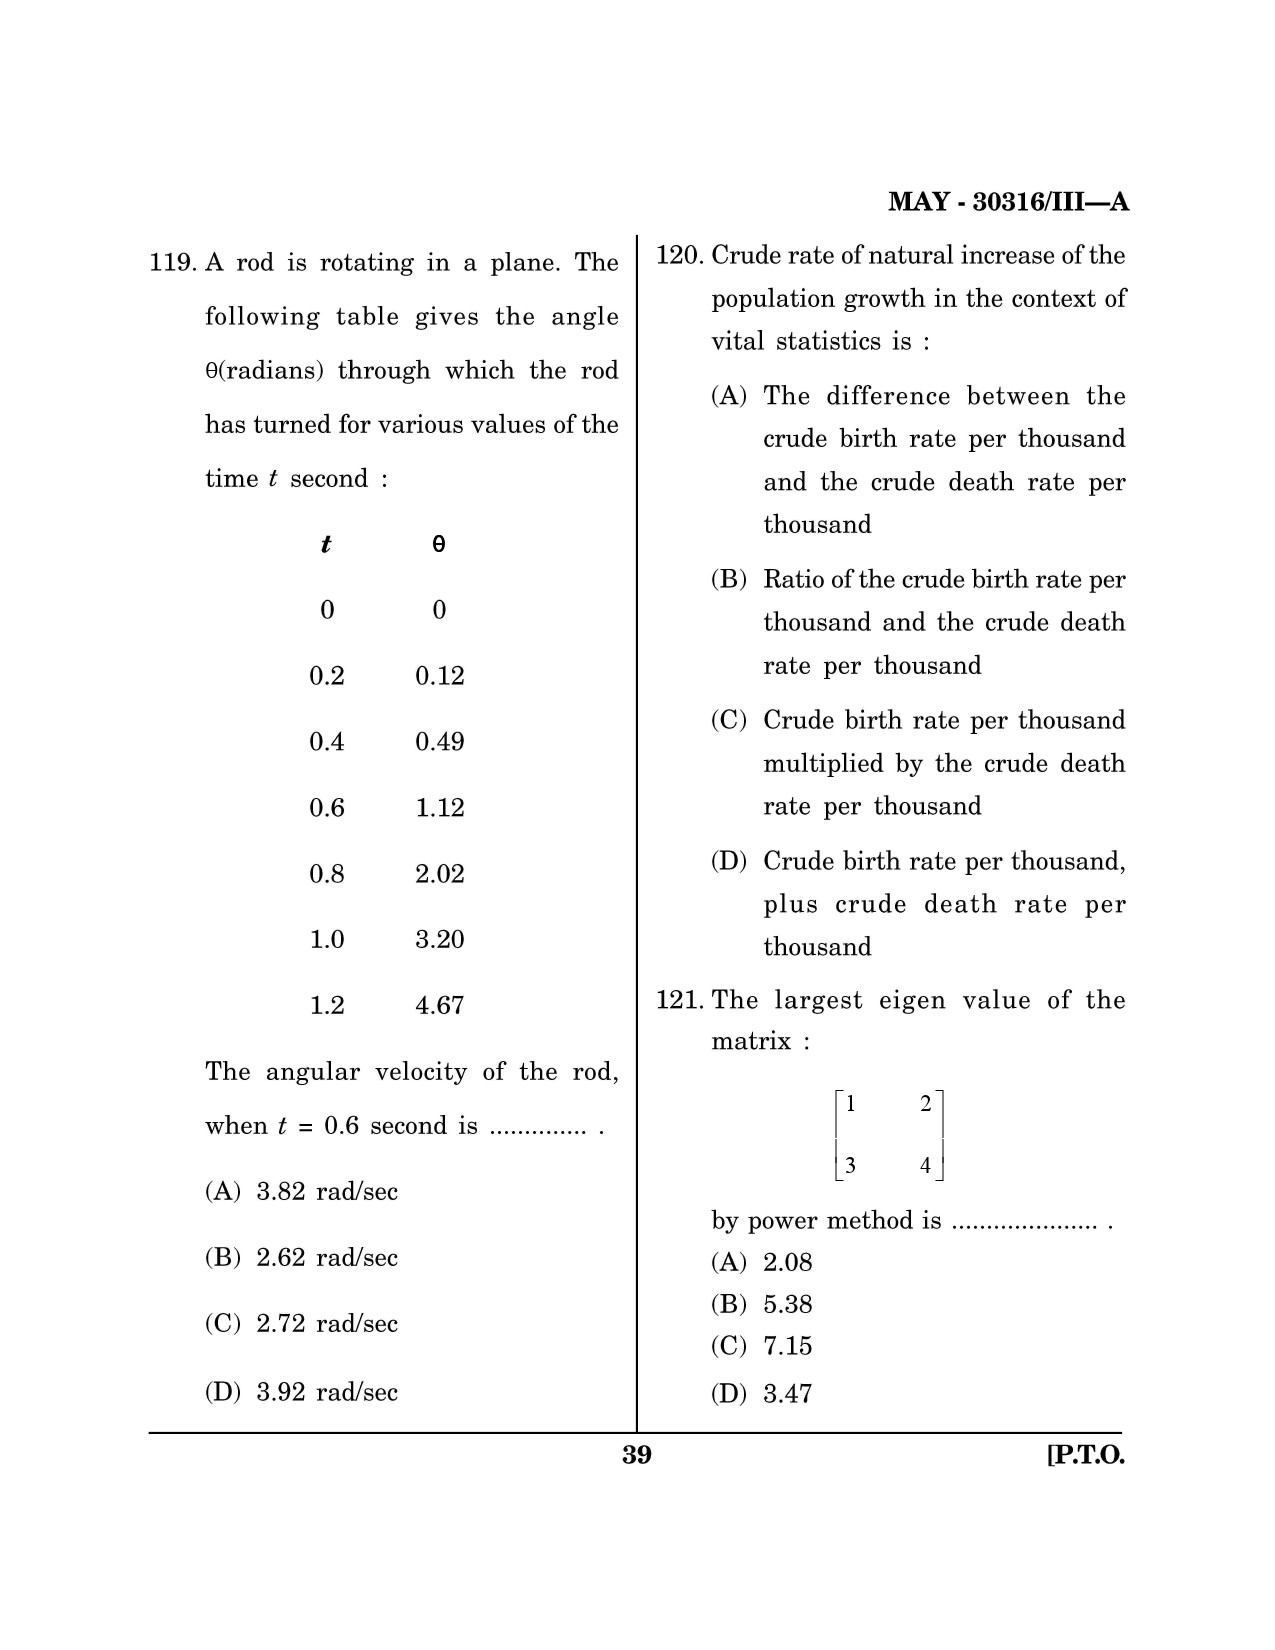 Maharashtra SET Mathematical Sciences Question Paper III May 2016 38